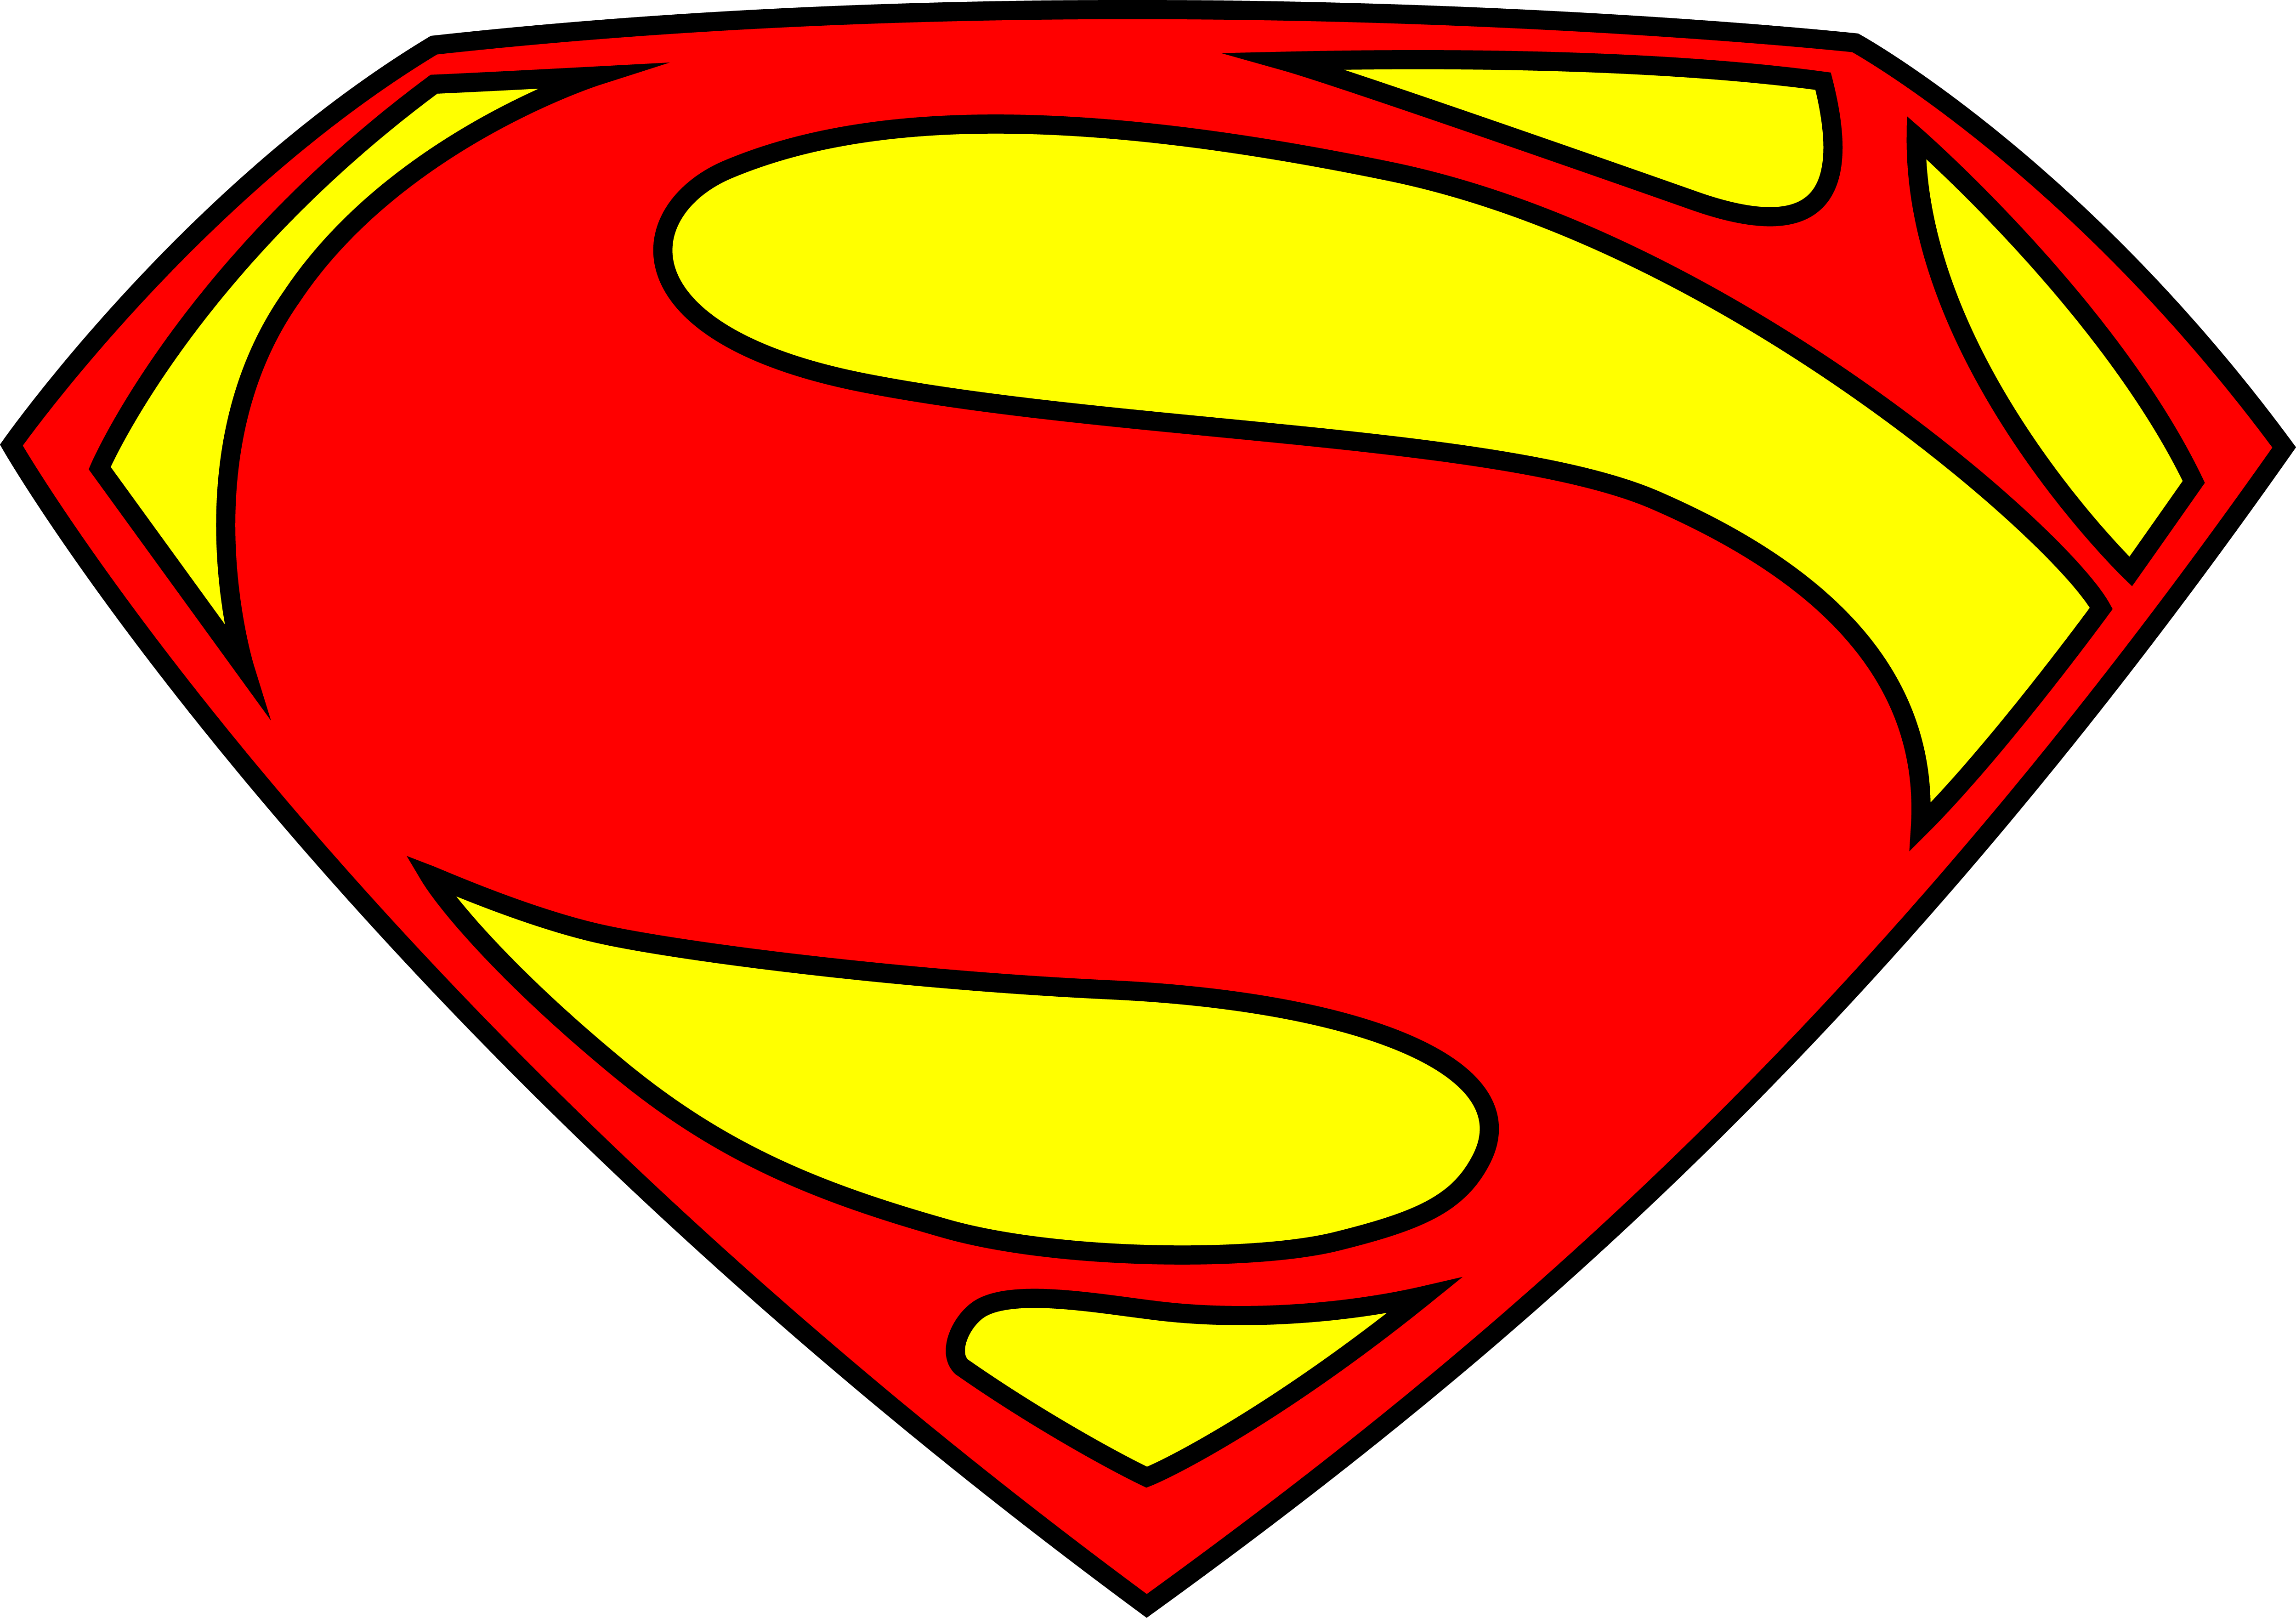 Süpermen logosu şeffaf